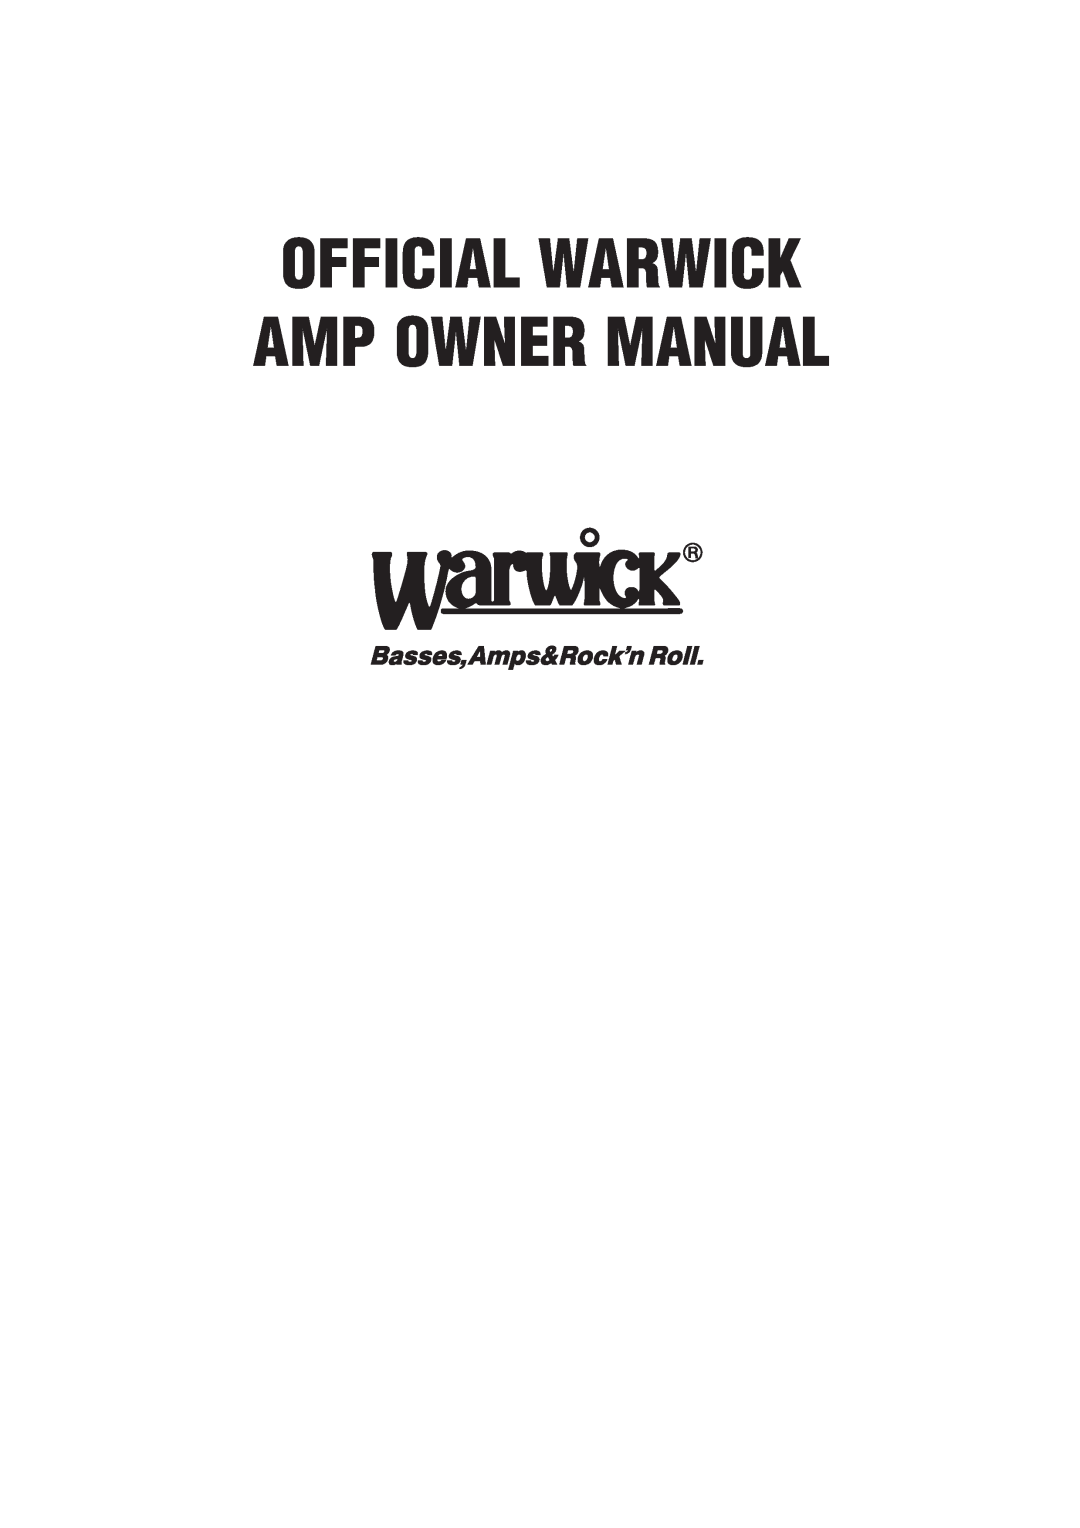 Warwick 5.1, 10.1 owner manual Official Warwick Amp Owner Manual 